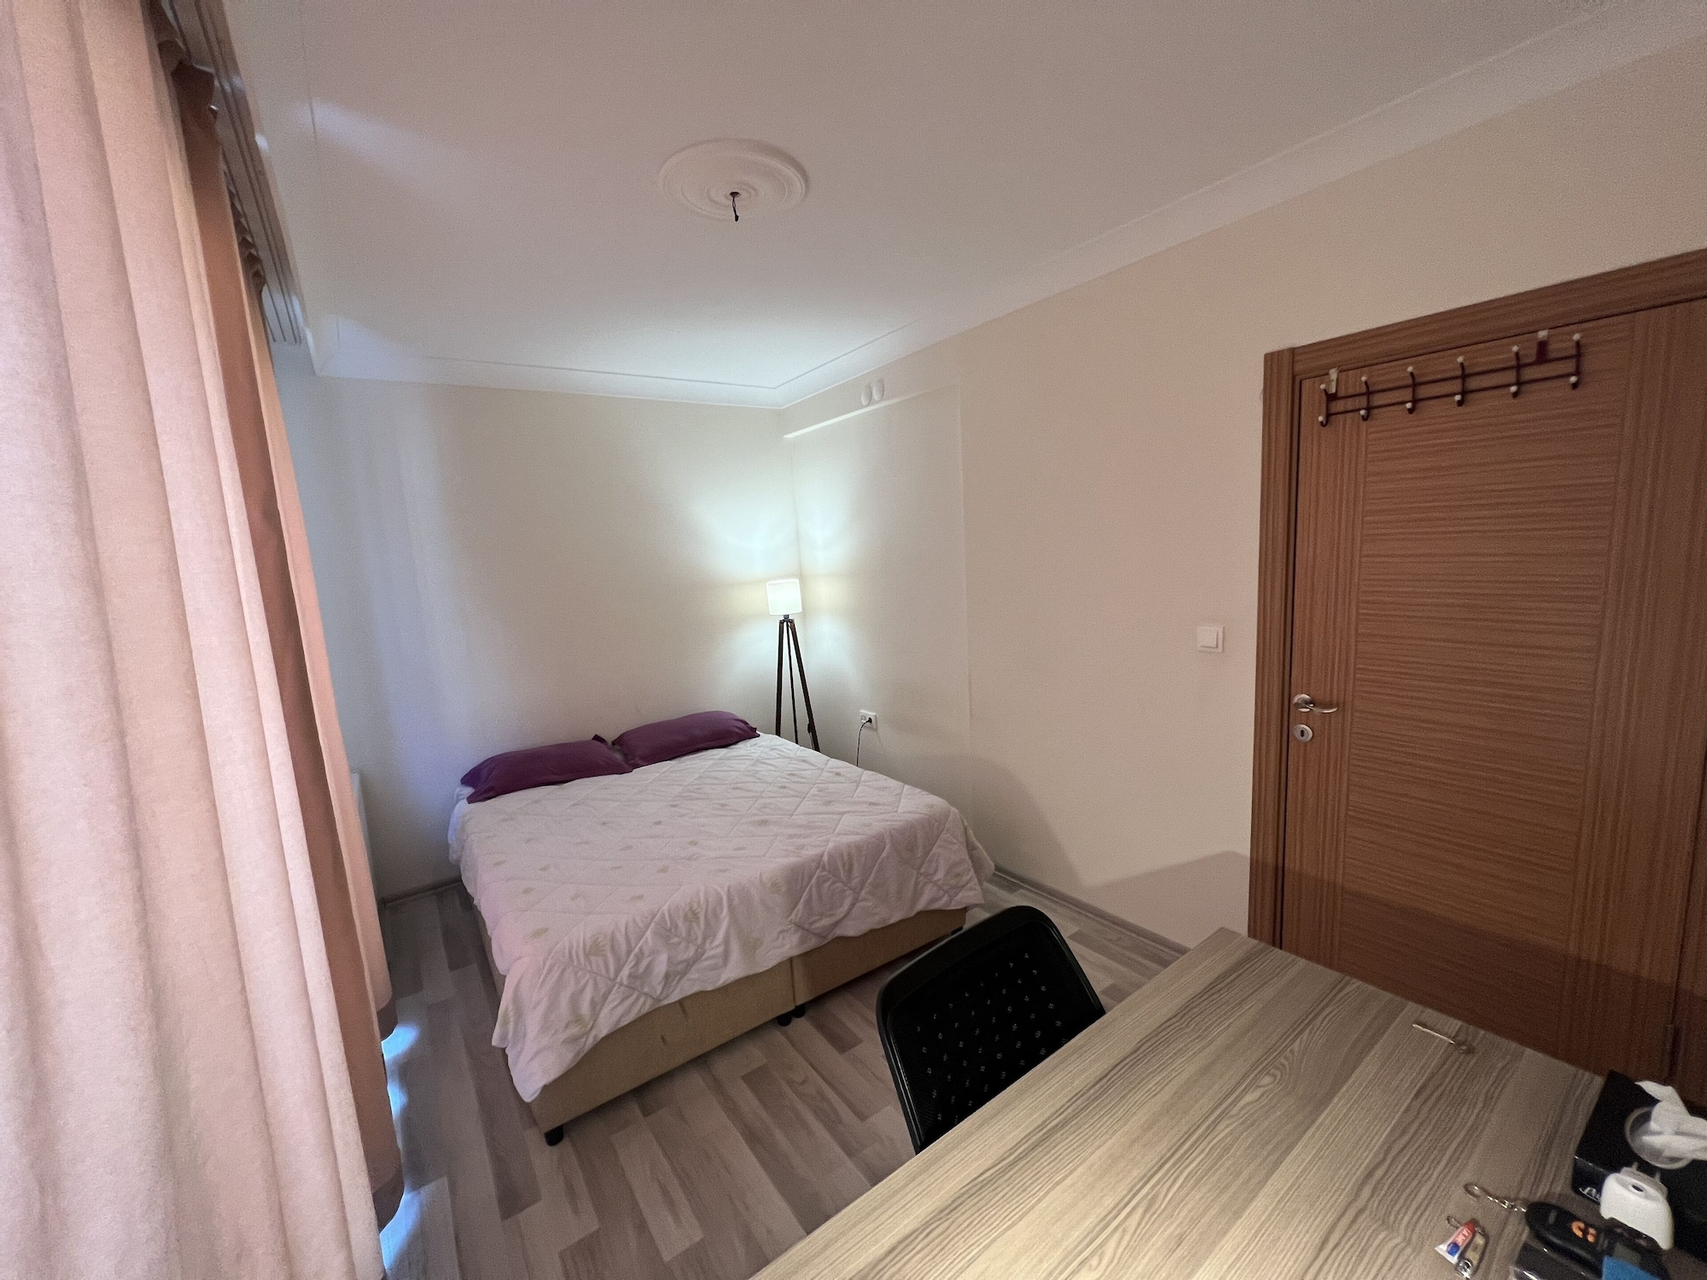 Bedroom 2, shared apartment with private room-özel odalı ortak daire, Gölbaşı